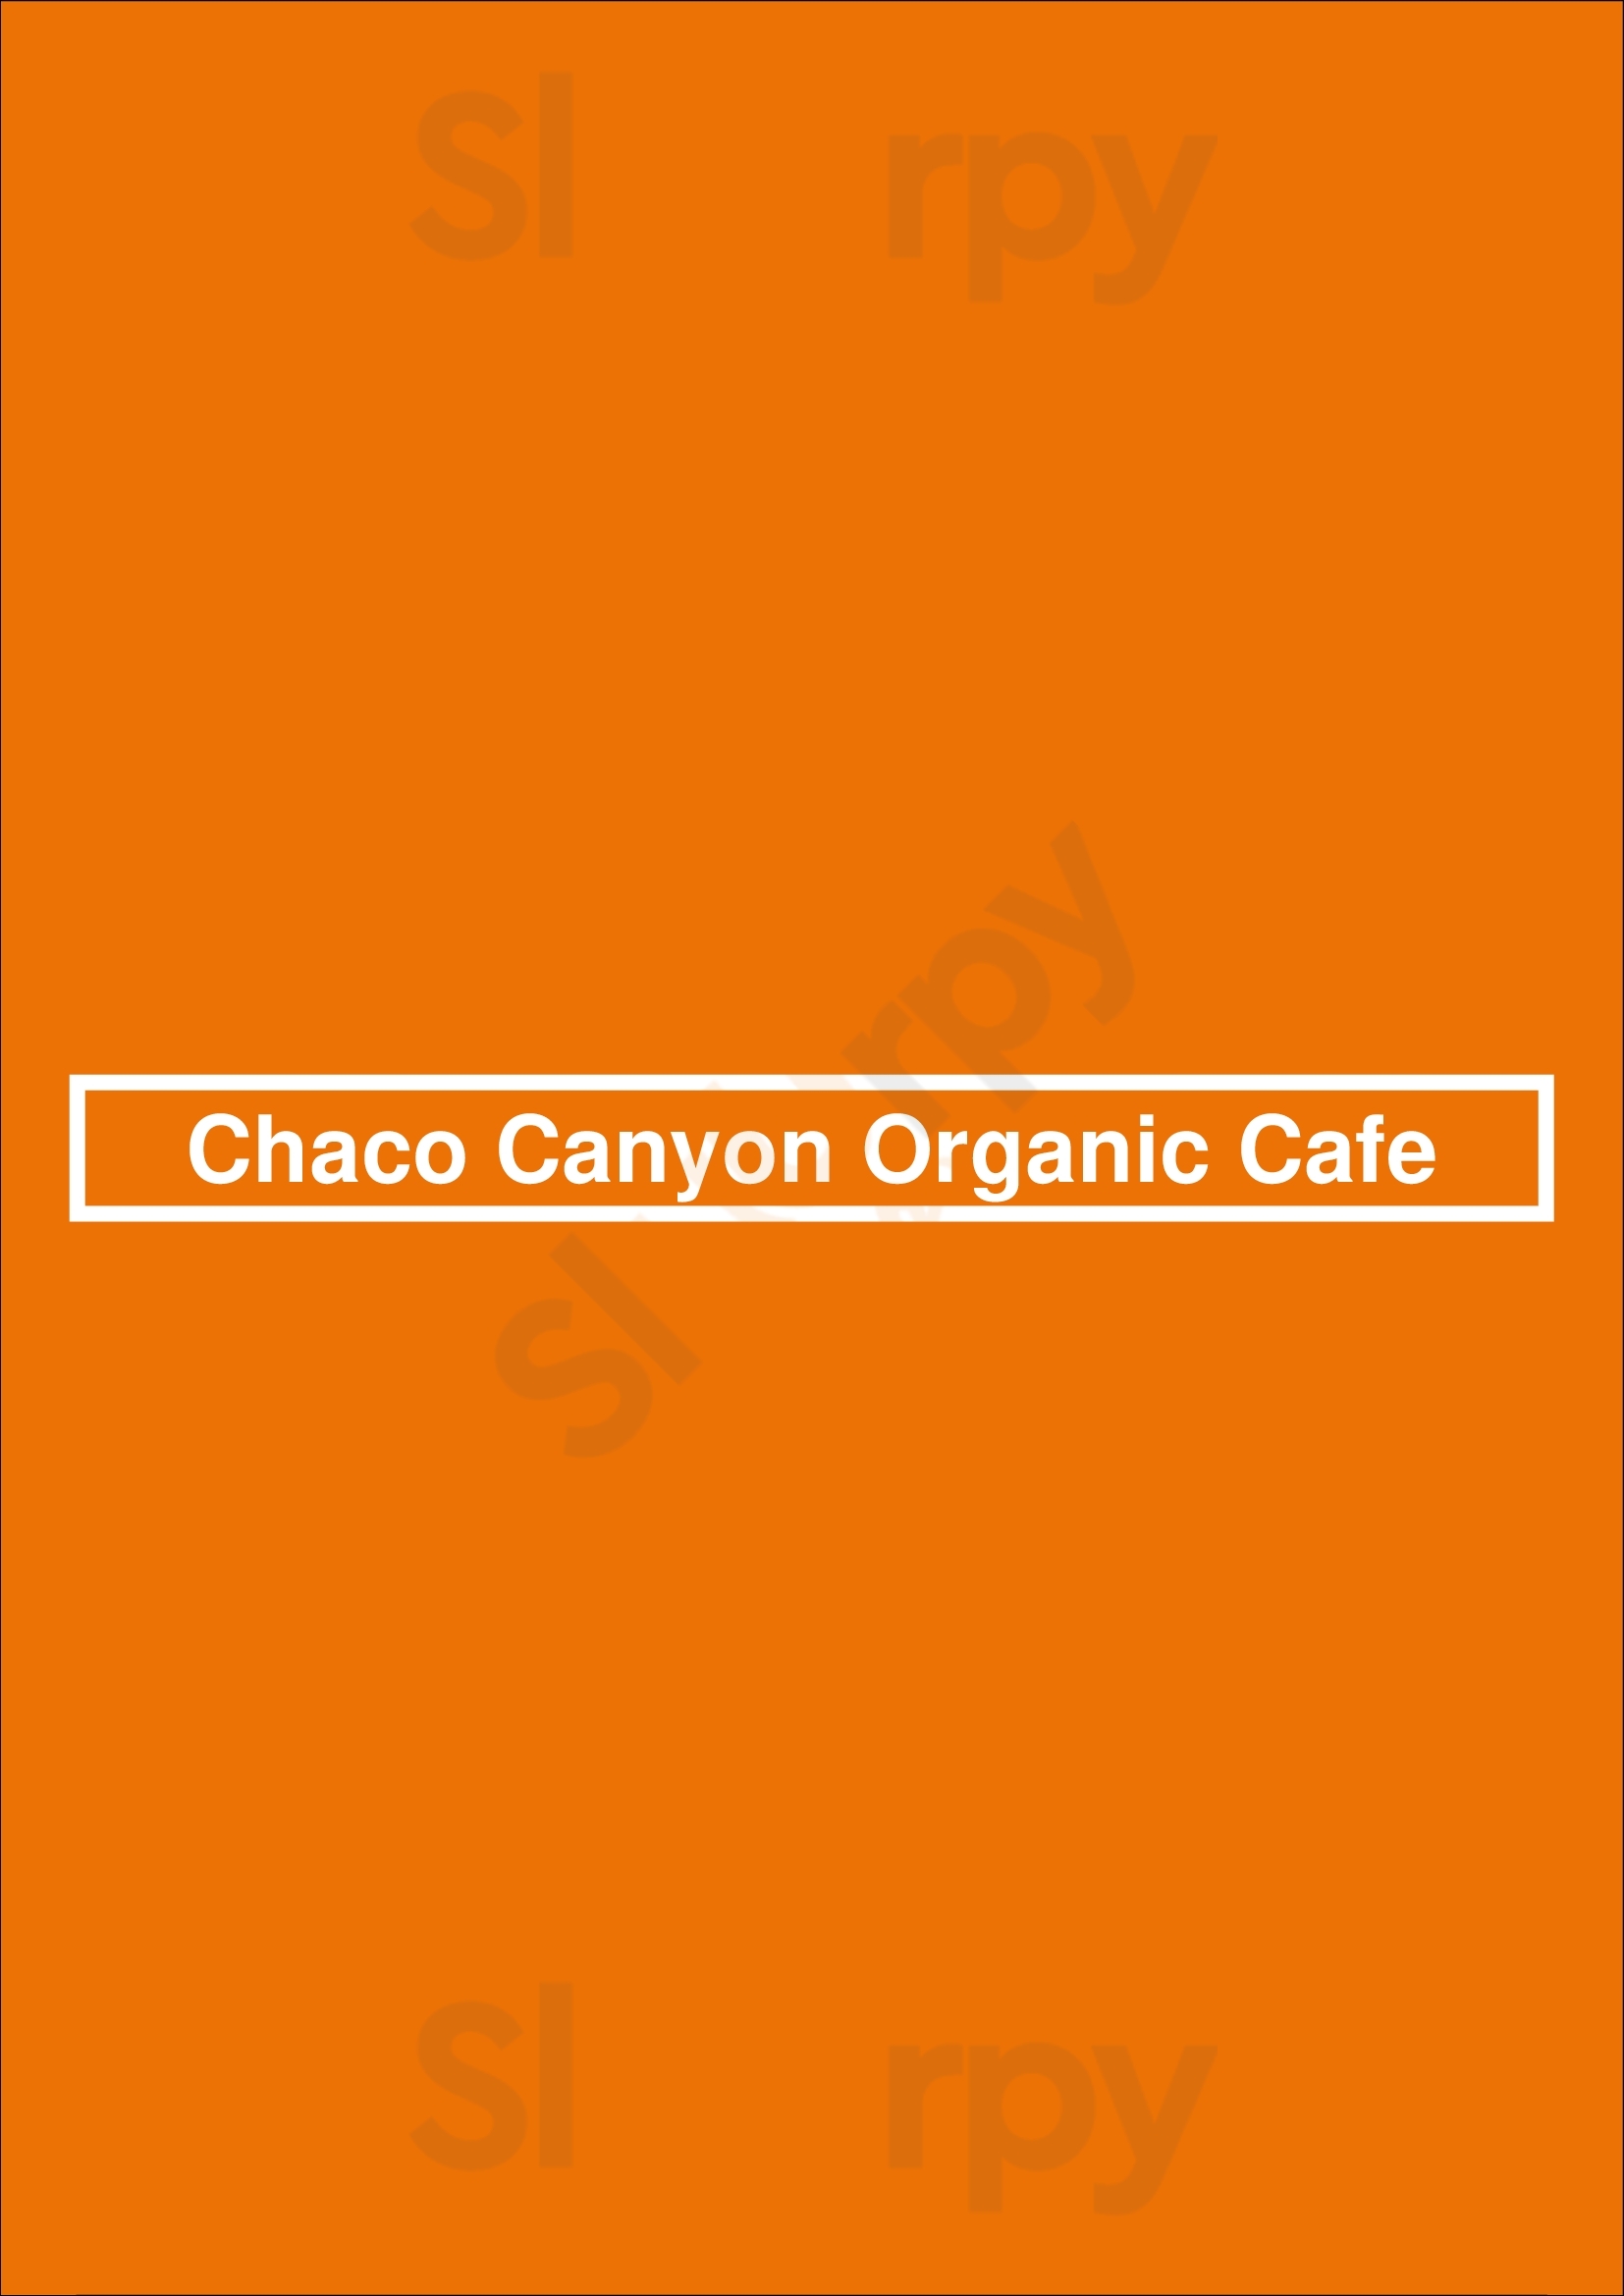 Chaco Canyon Organic Cafe Seattle Menu - 1